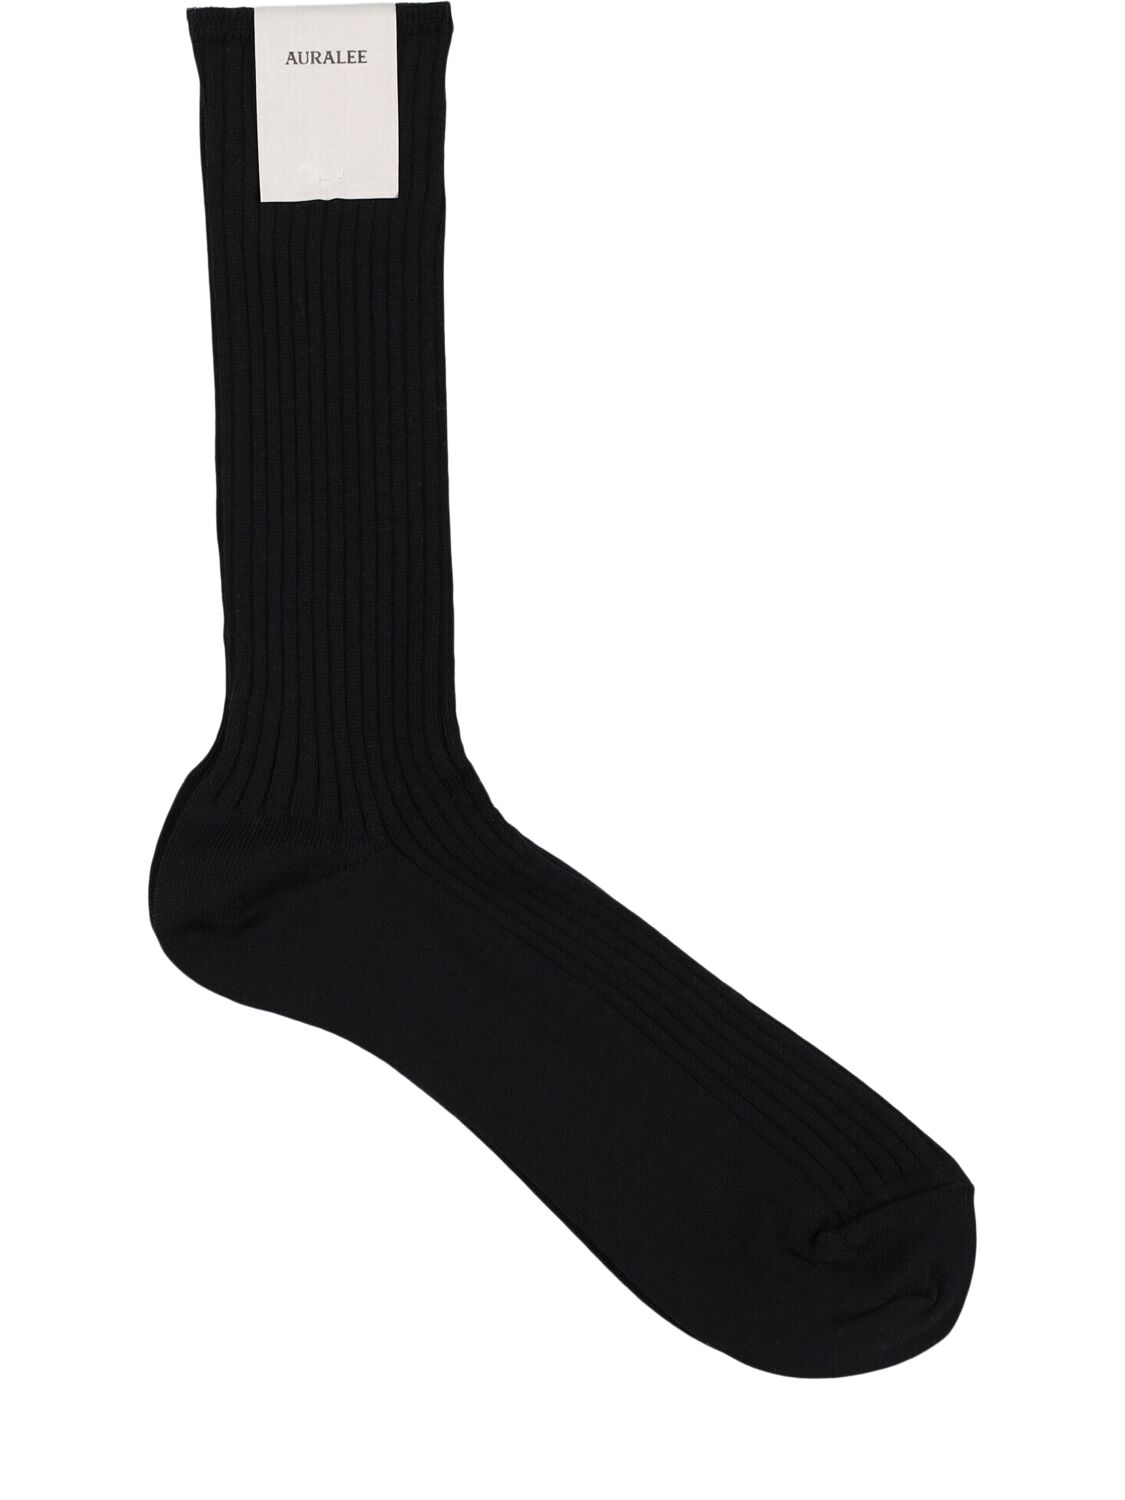 Auralee Cotton & Nylon High Socks In Black